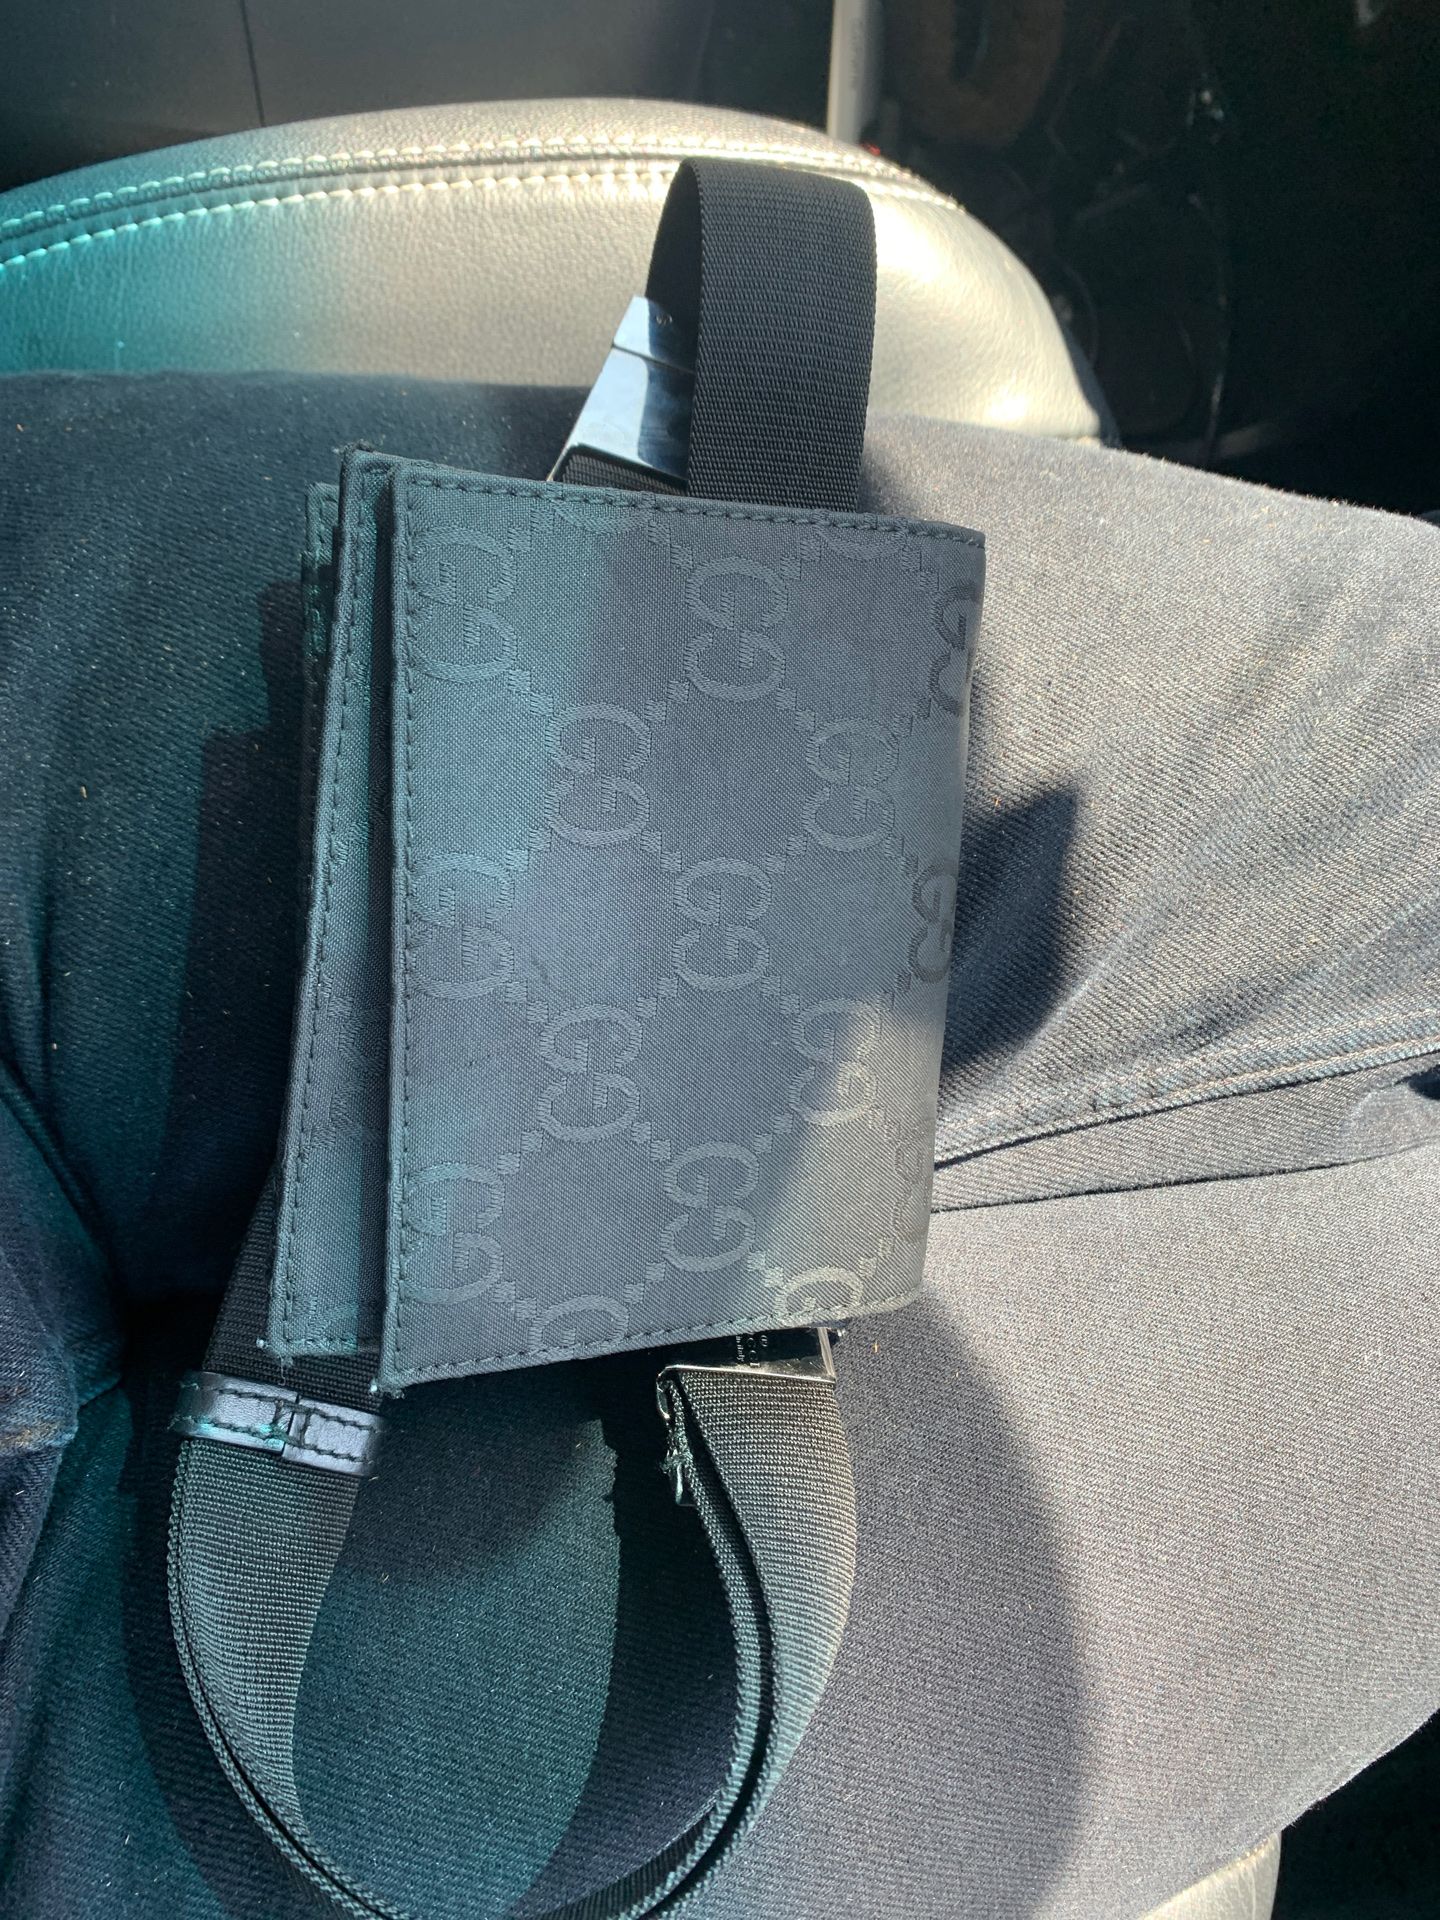 Gucci waist wallet / Fanny pack